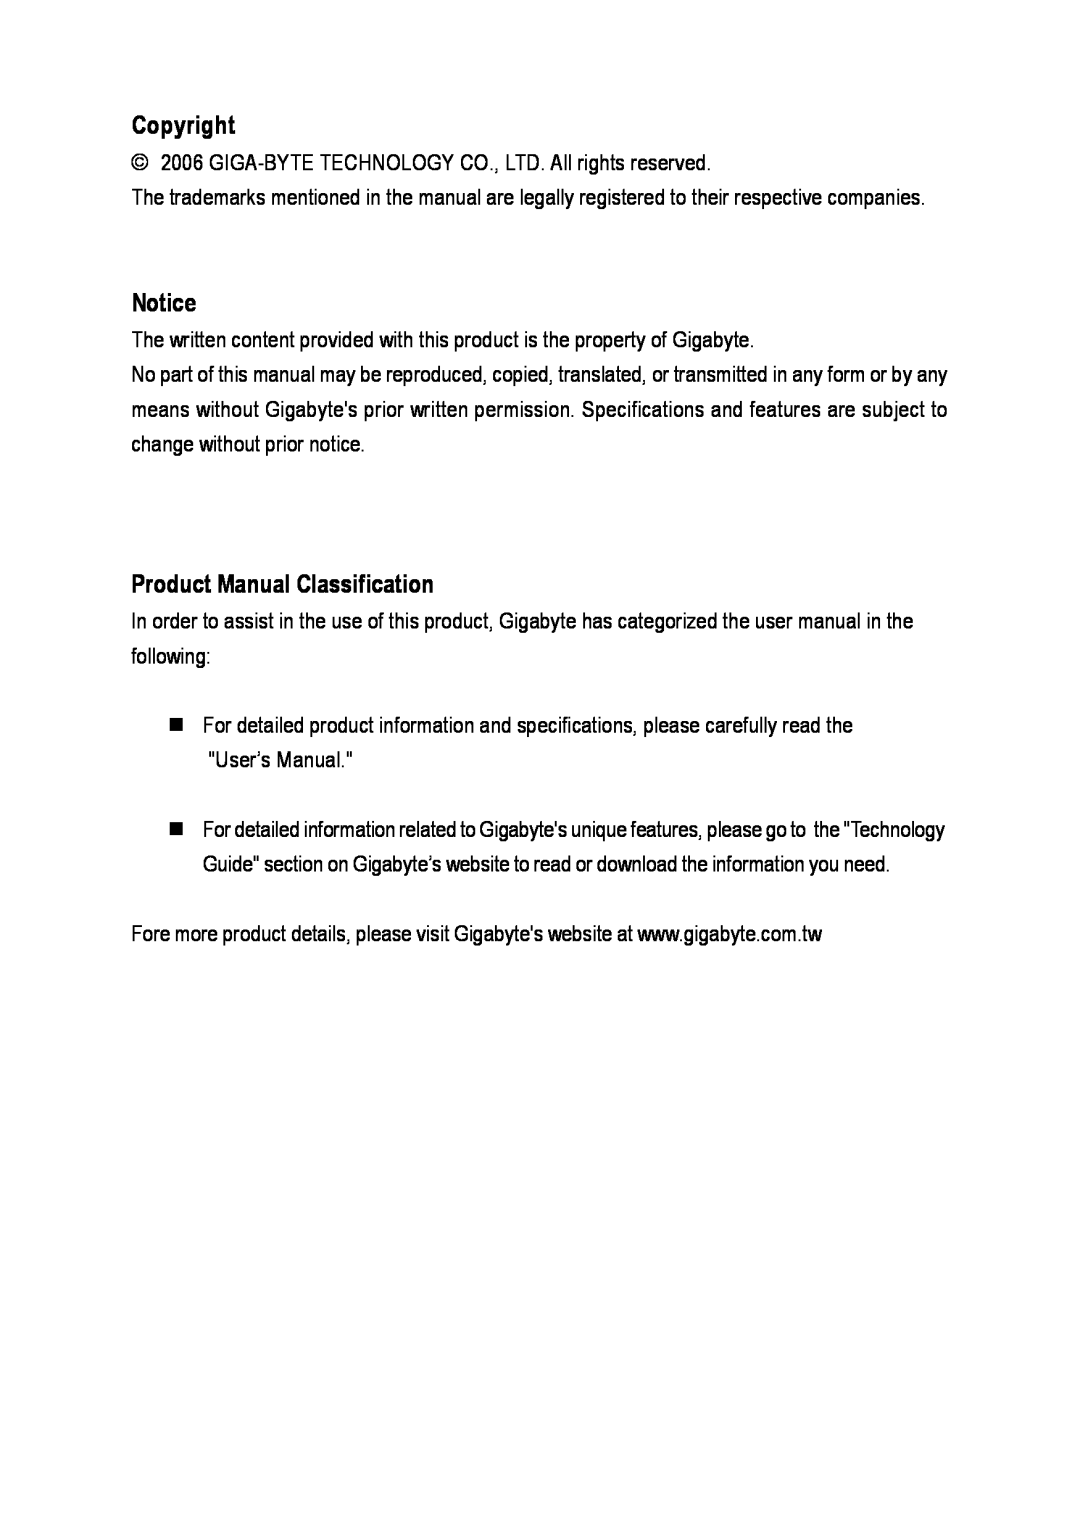 Gigabyte GA-8S661GXMP user manual Copyright, Product Manual Classification 